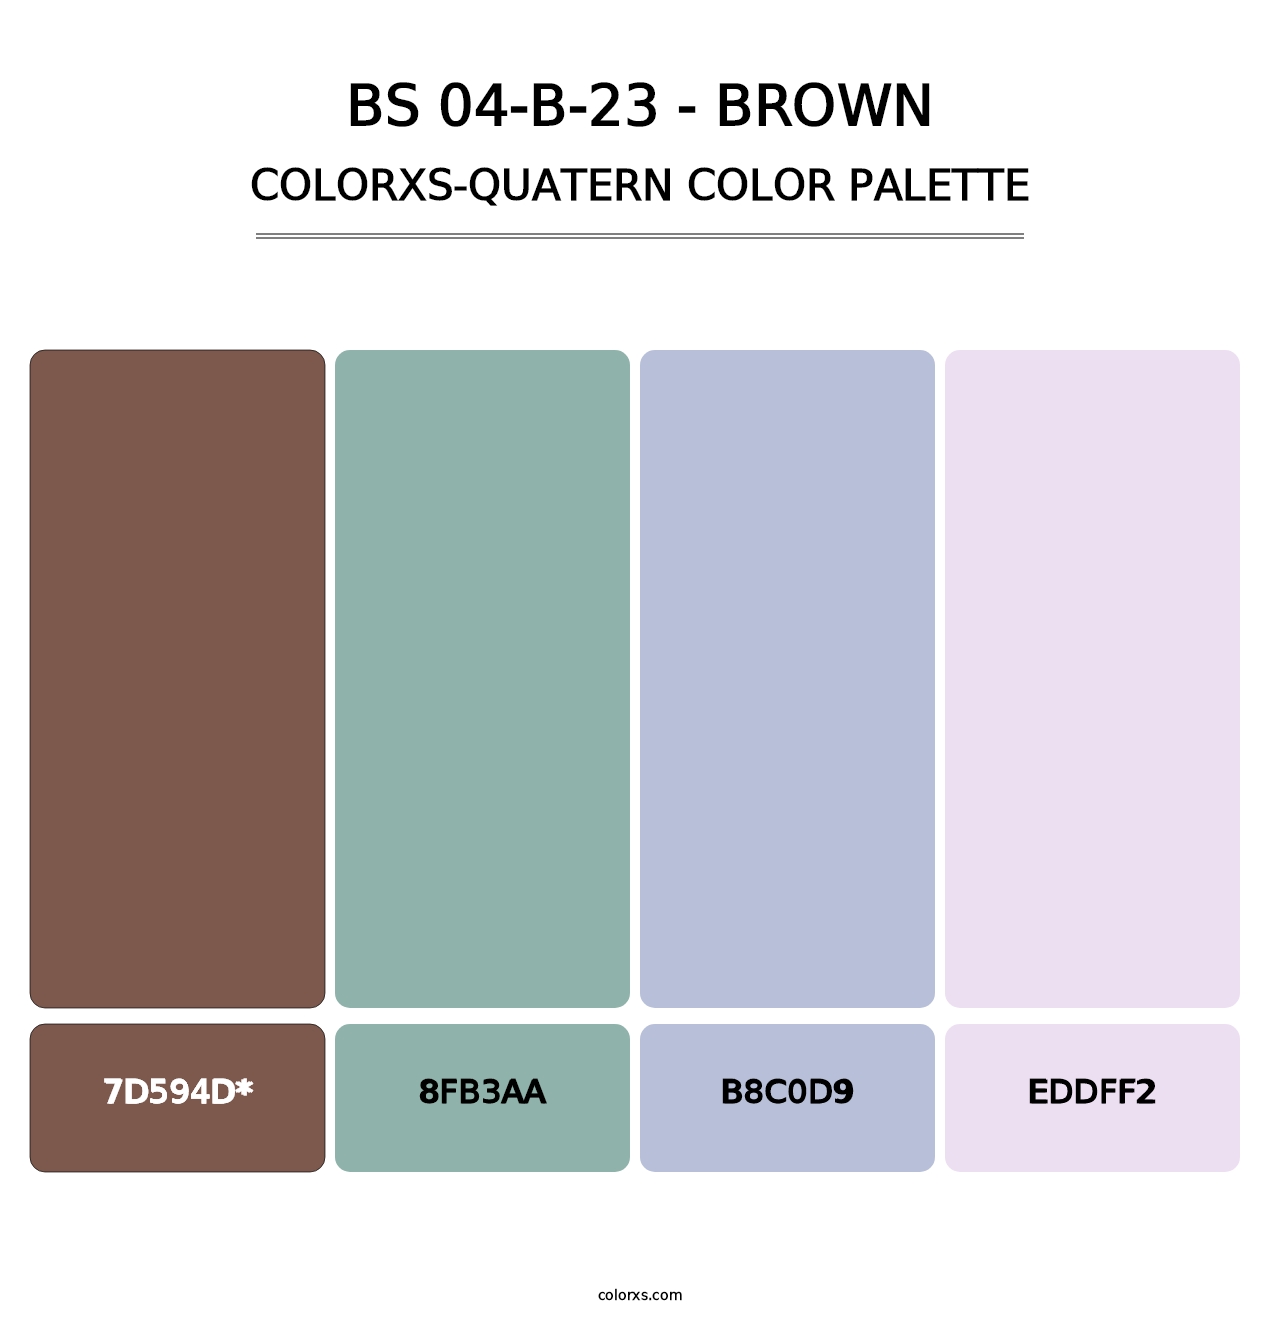 BS 04-B-23 - Brown - Colorxs Quatern Palette